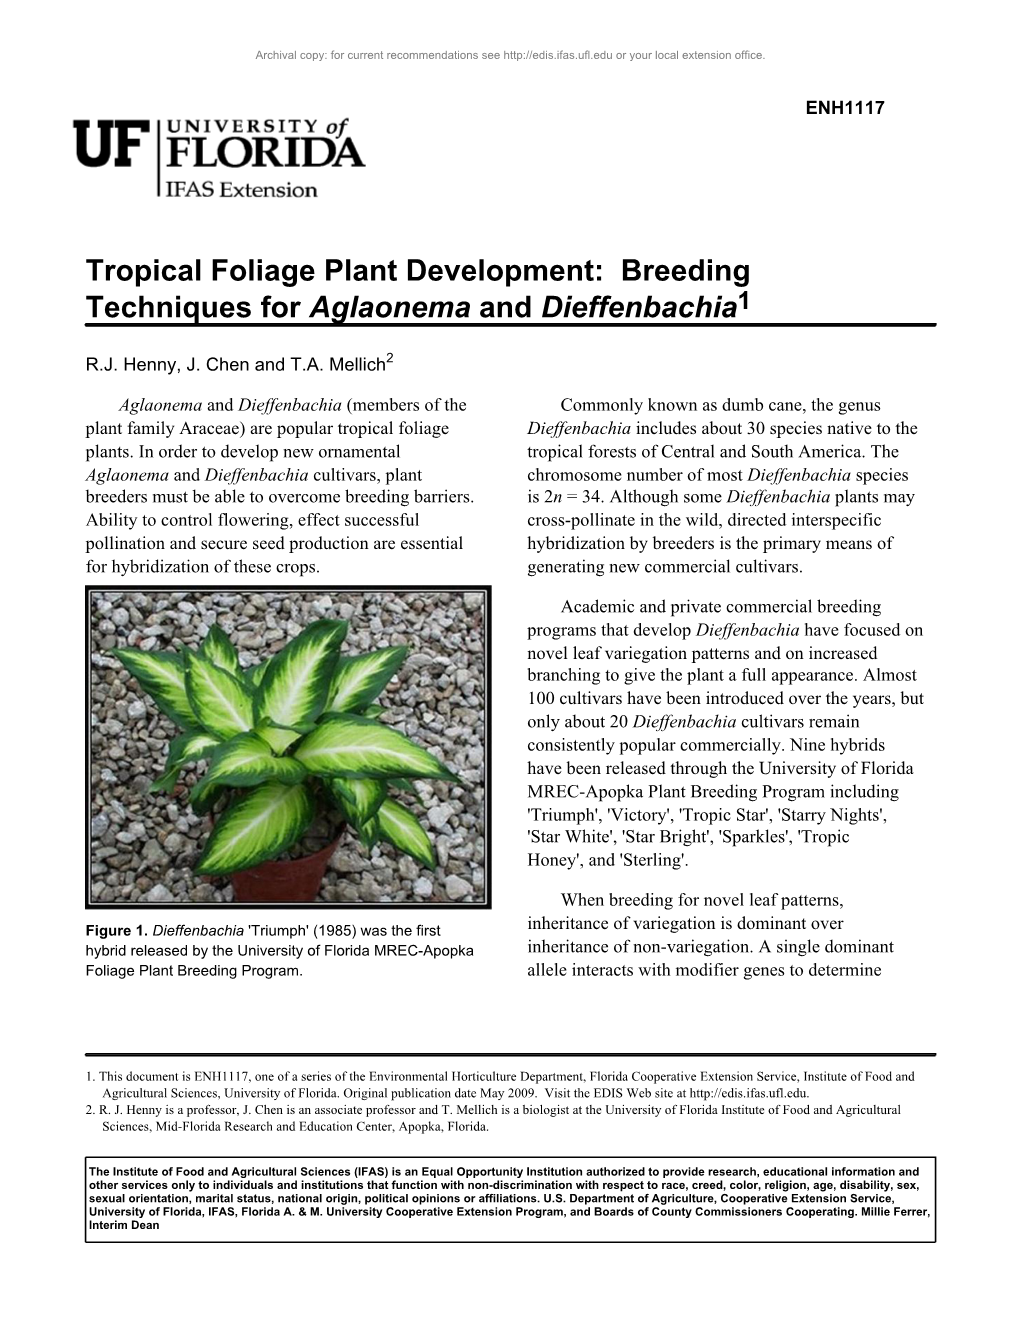 Tropical Foliage Plant Development: Breeding Techniques for Aglaonema and Dieffenbachia1